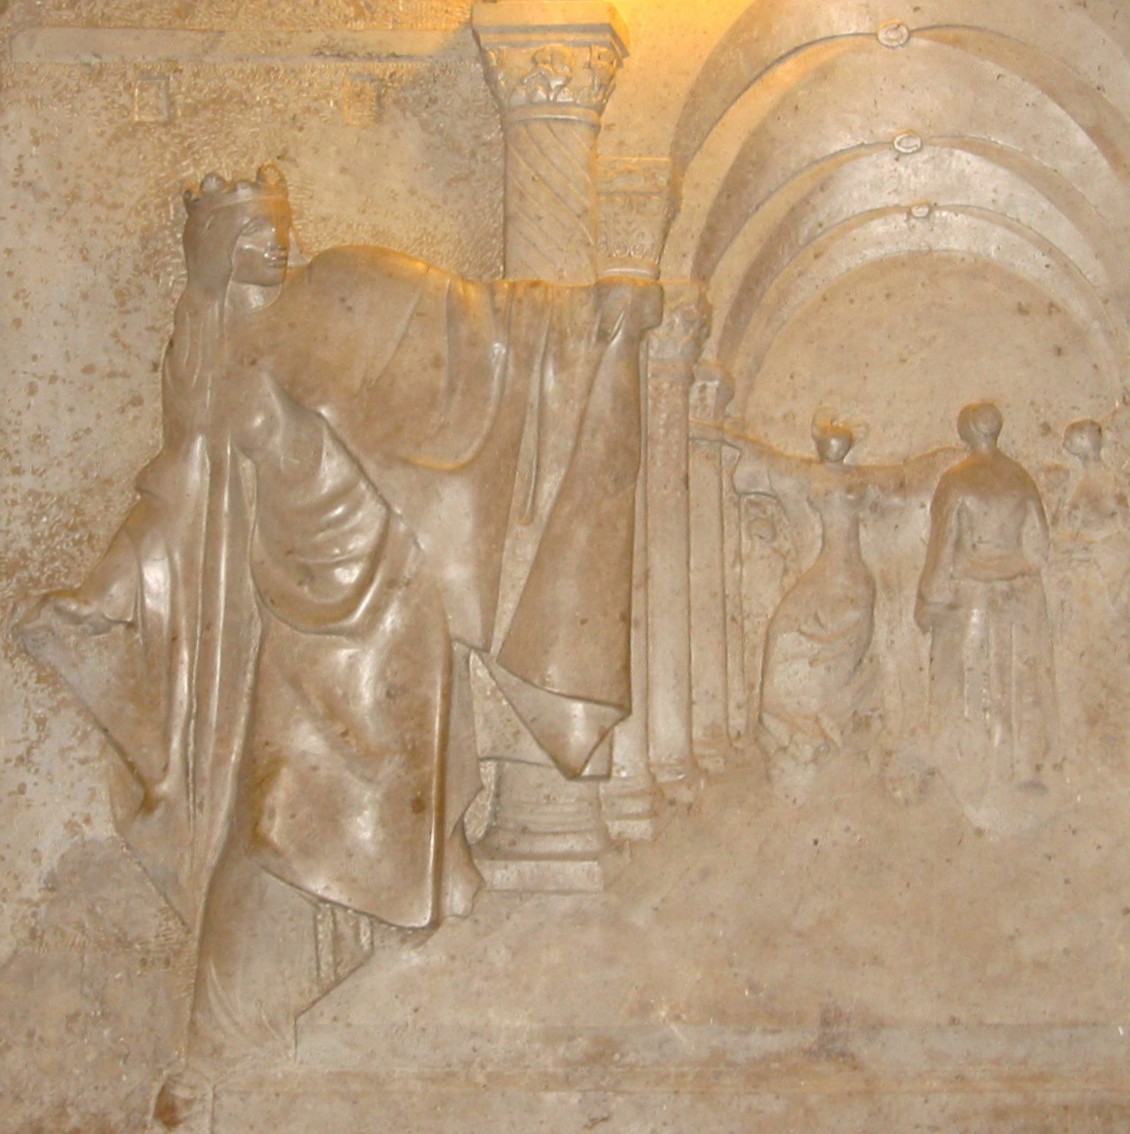 Relief in der Ungarischen Kapelle im Petersdom in Rom